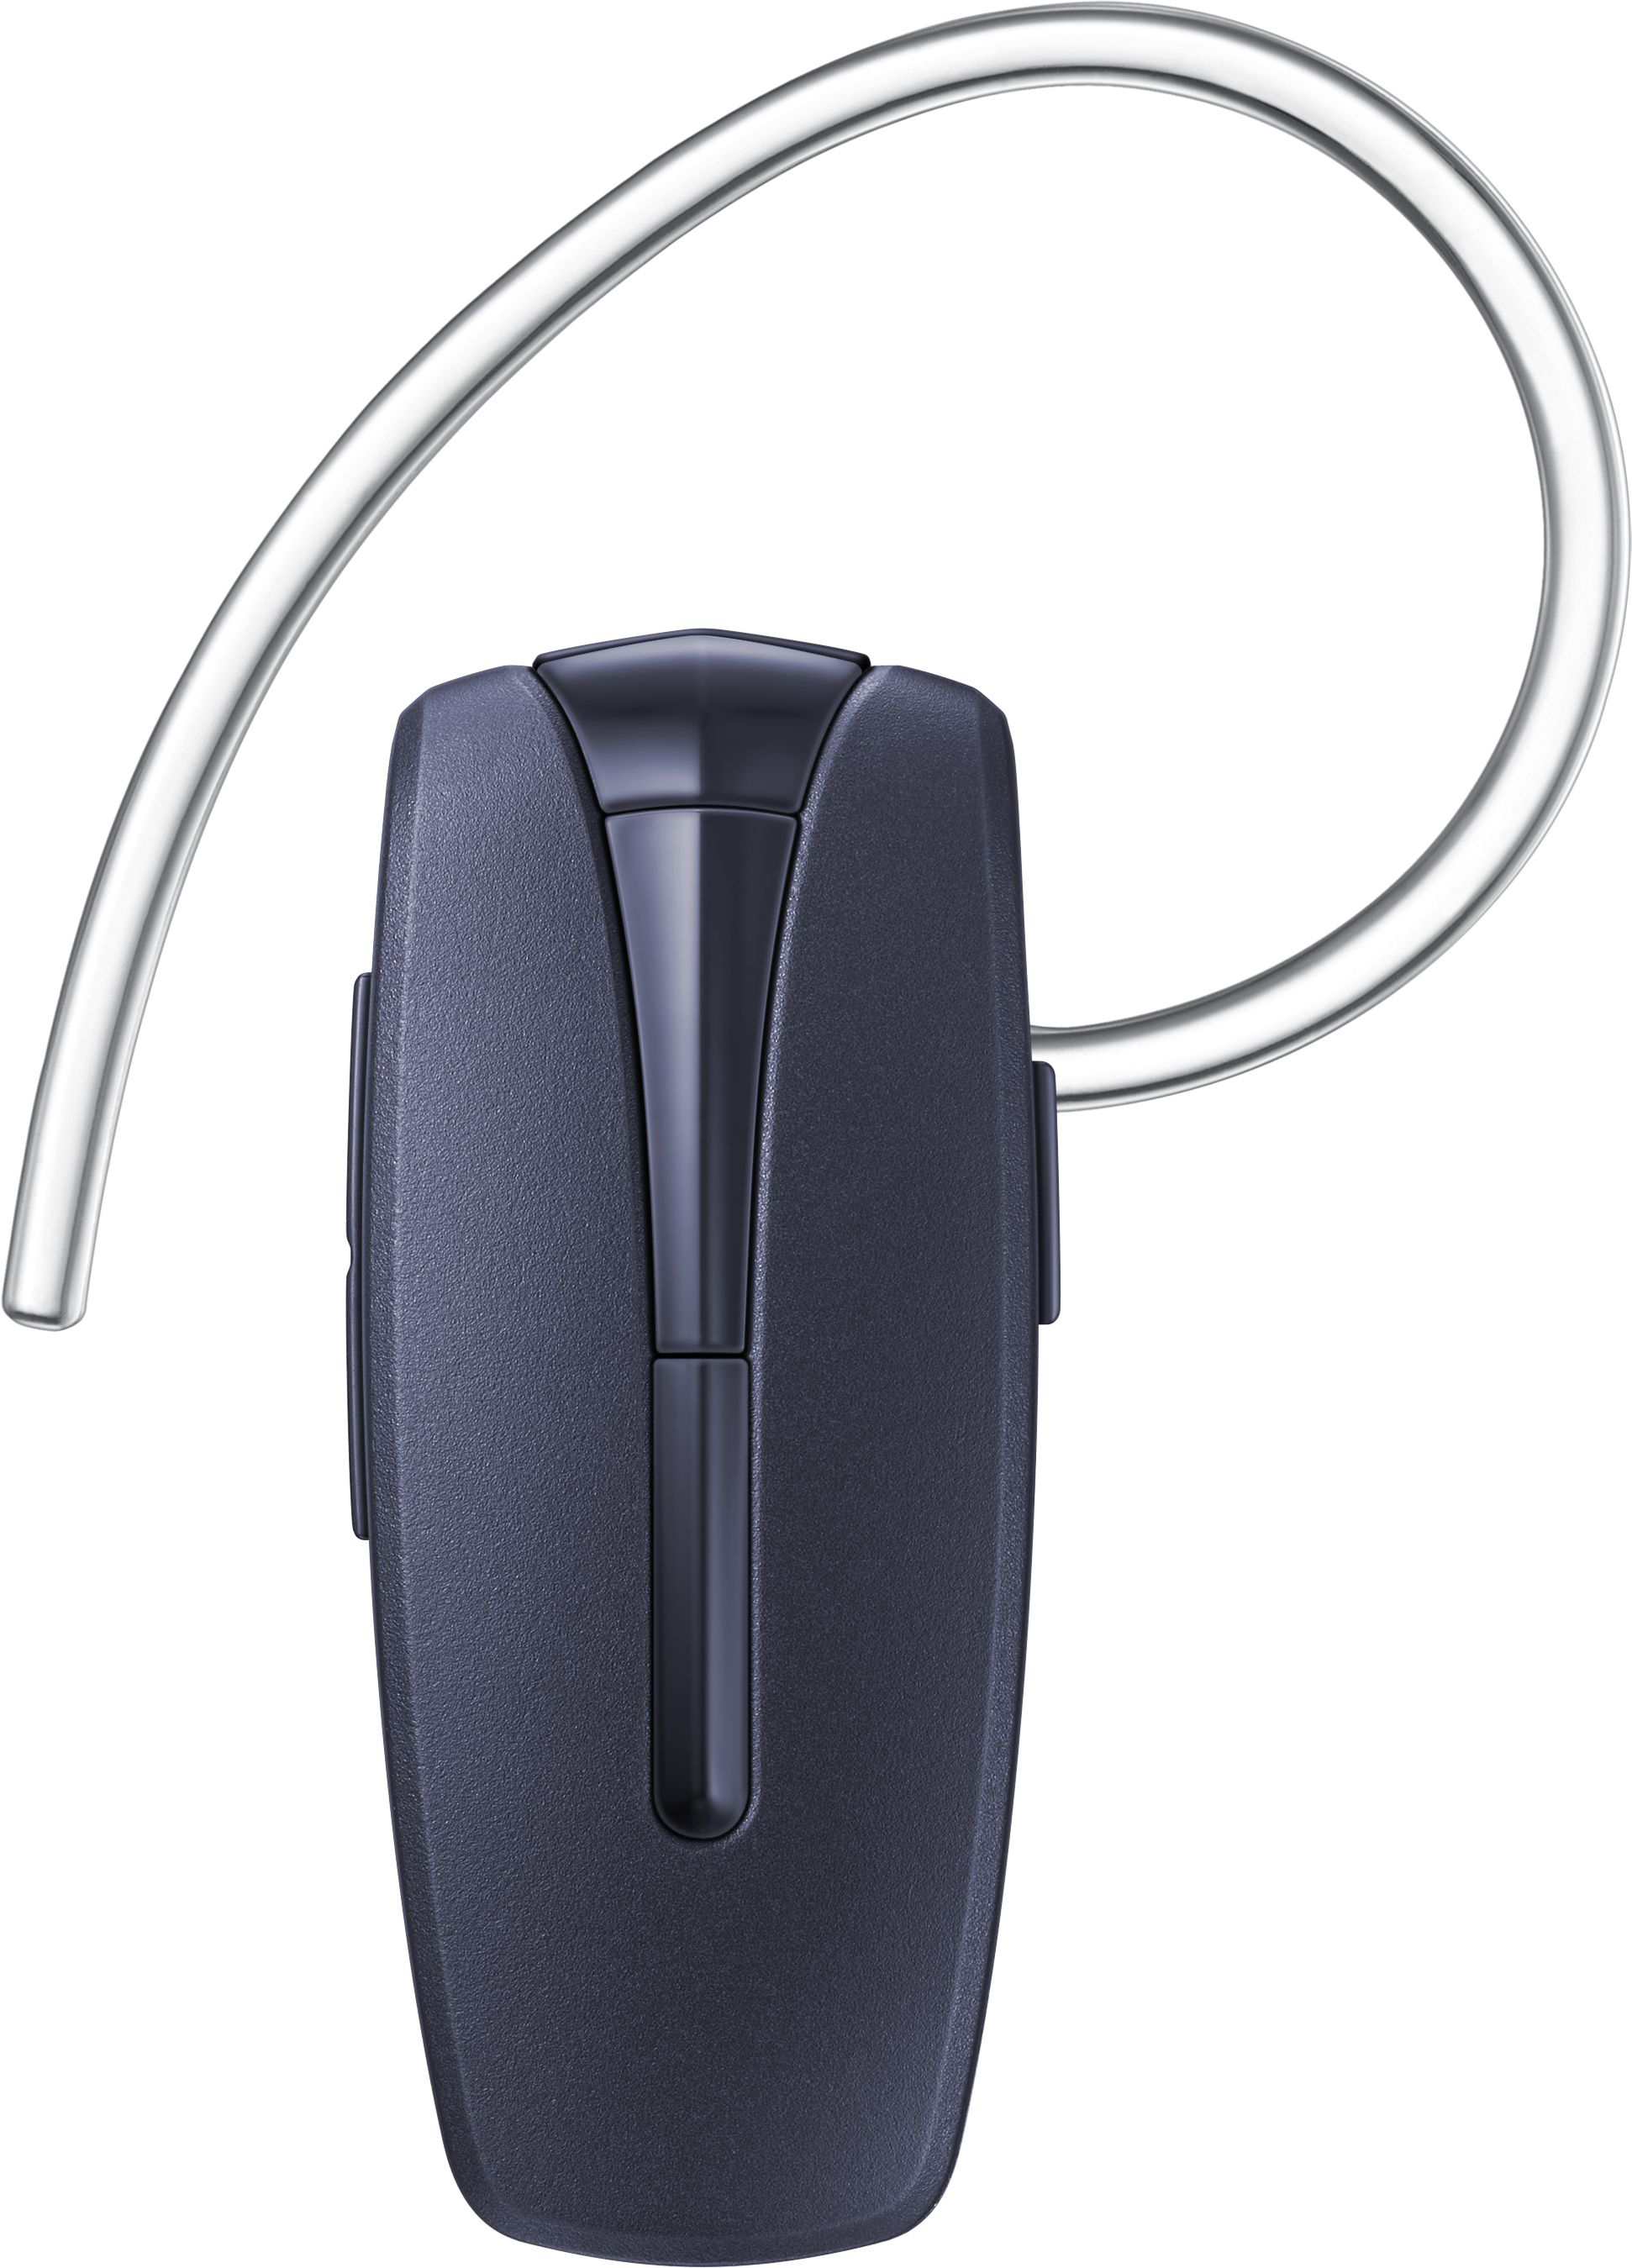 Mono SAMSUNG blau BHM1350 Bluetooth-Headset Headset